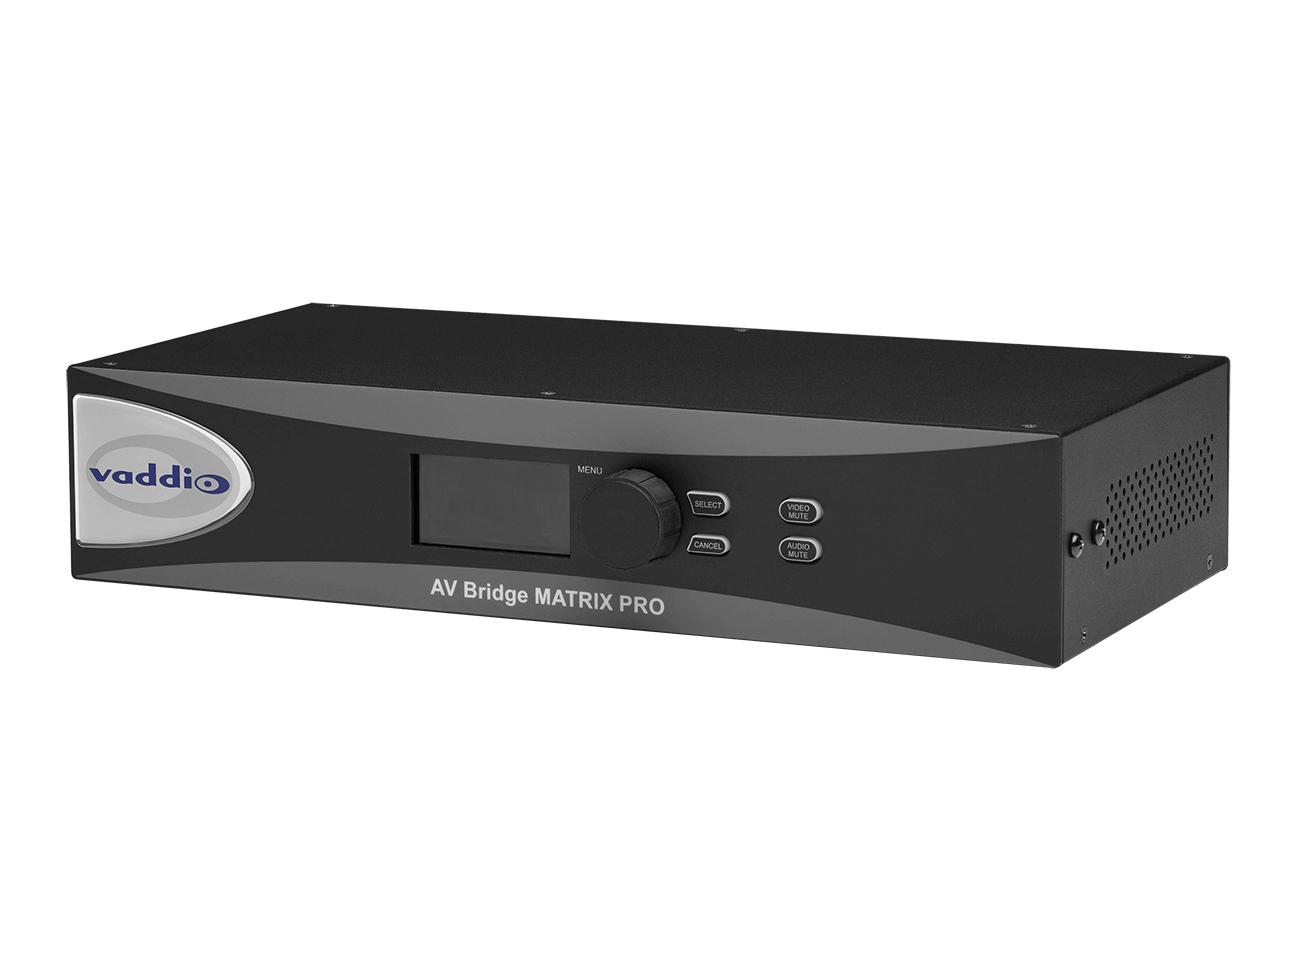 999-8230-000 AV Bridge MATRIX PRO IP and USB 2.0 streaming Encoder by Vaddio